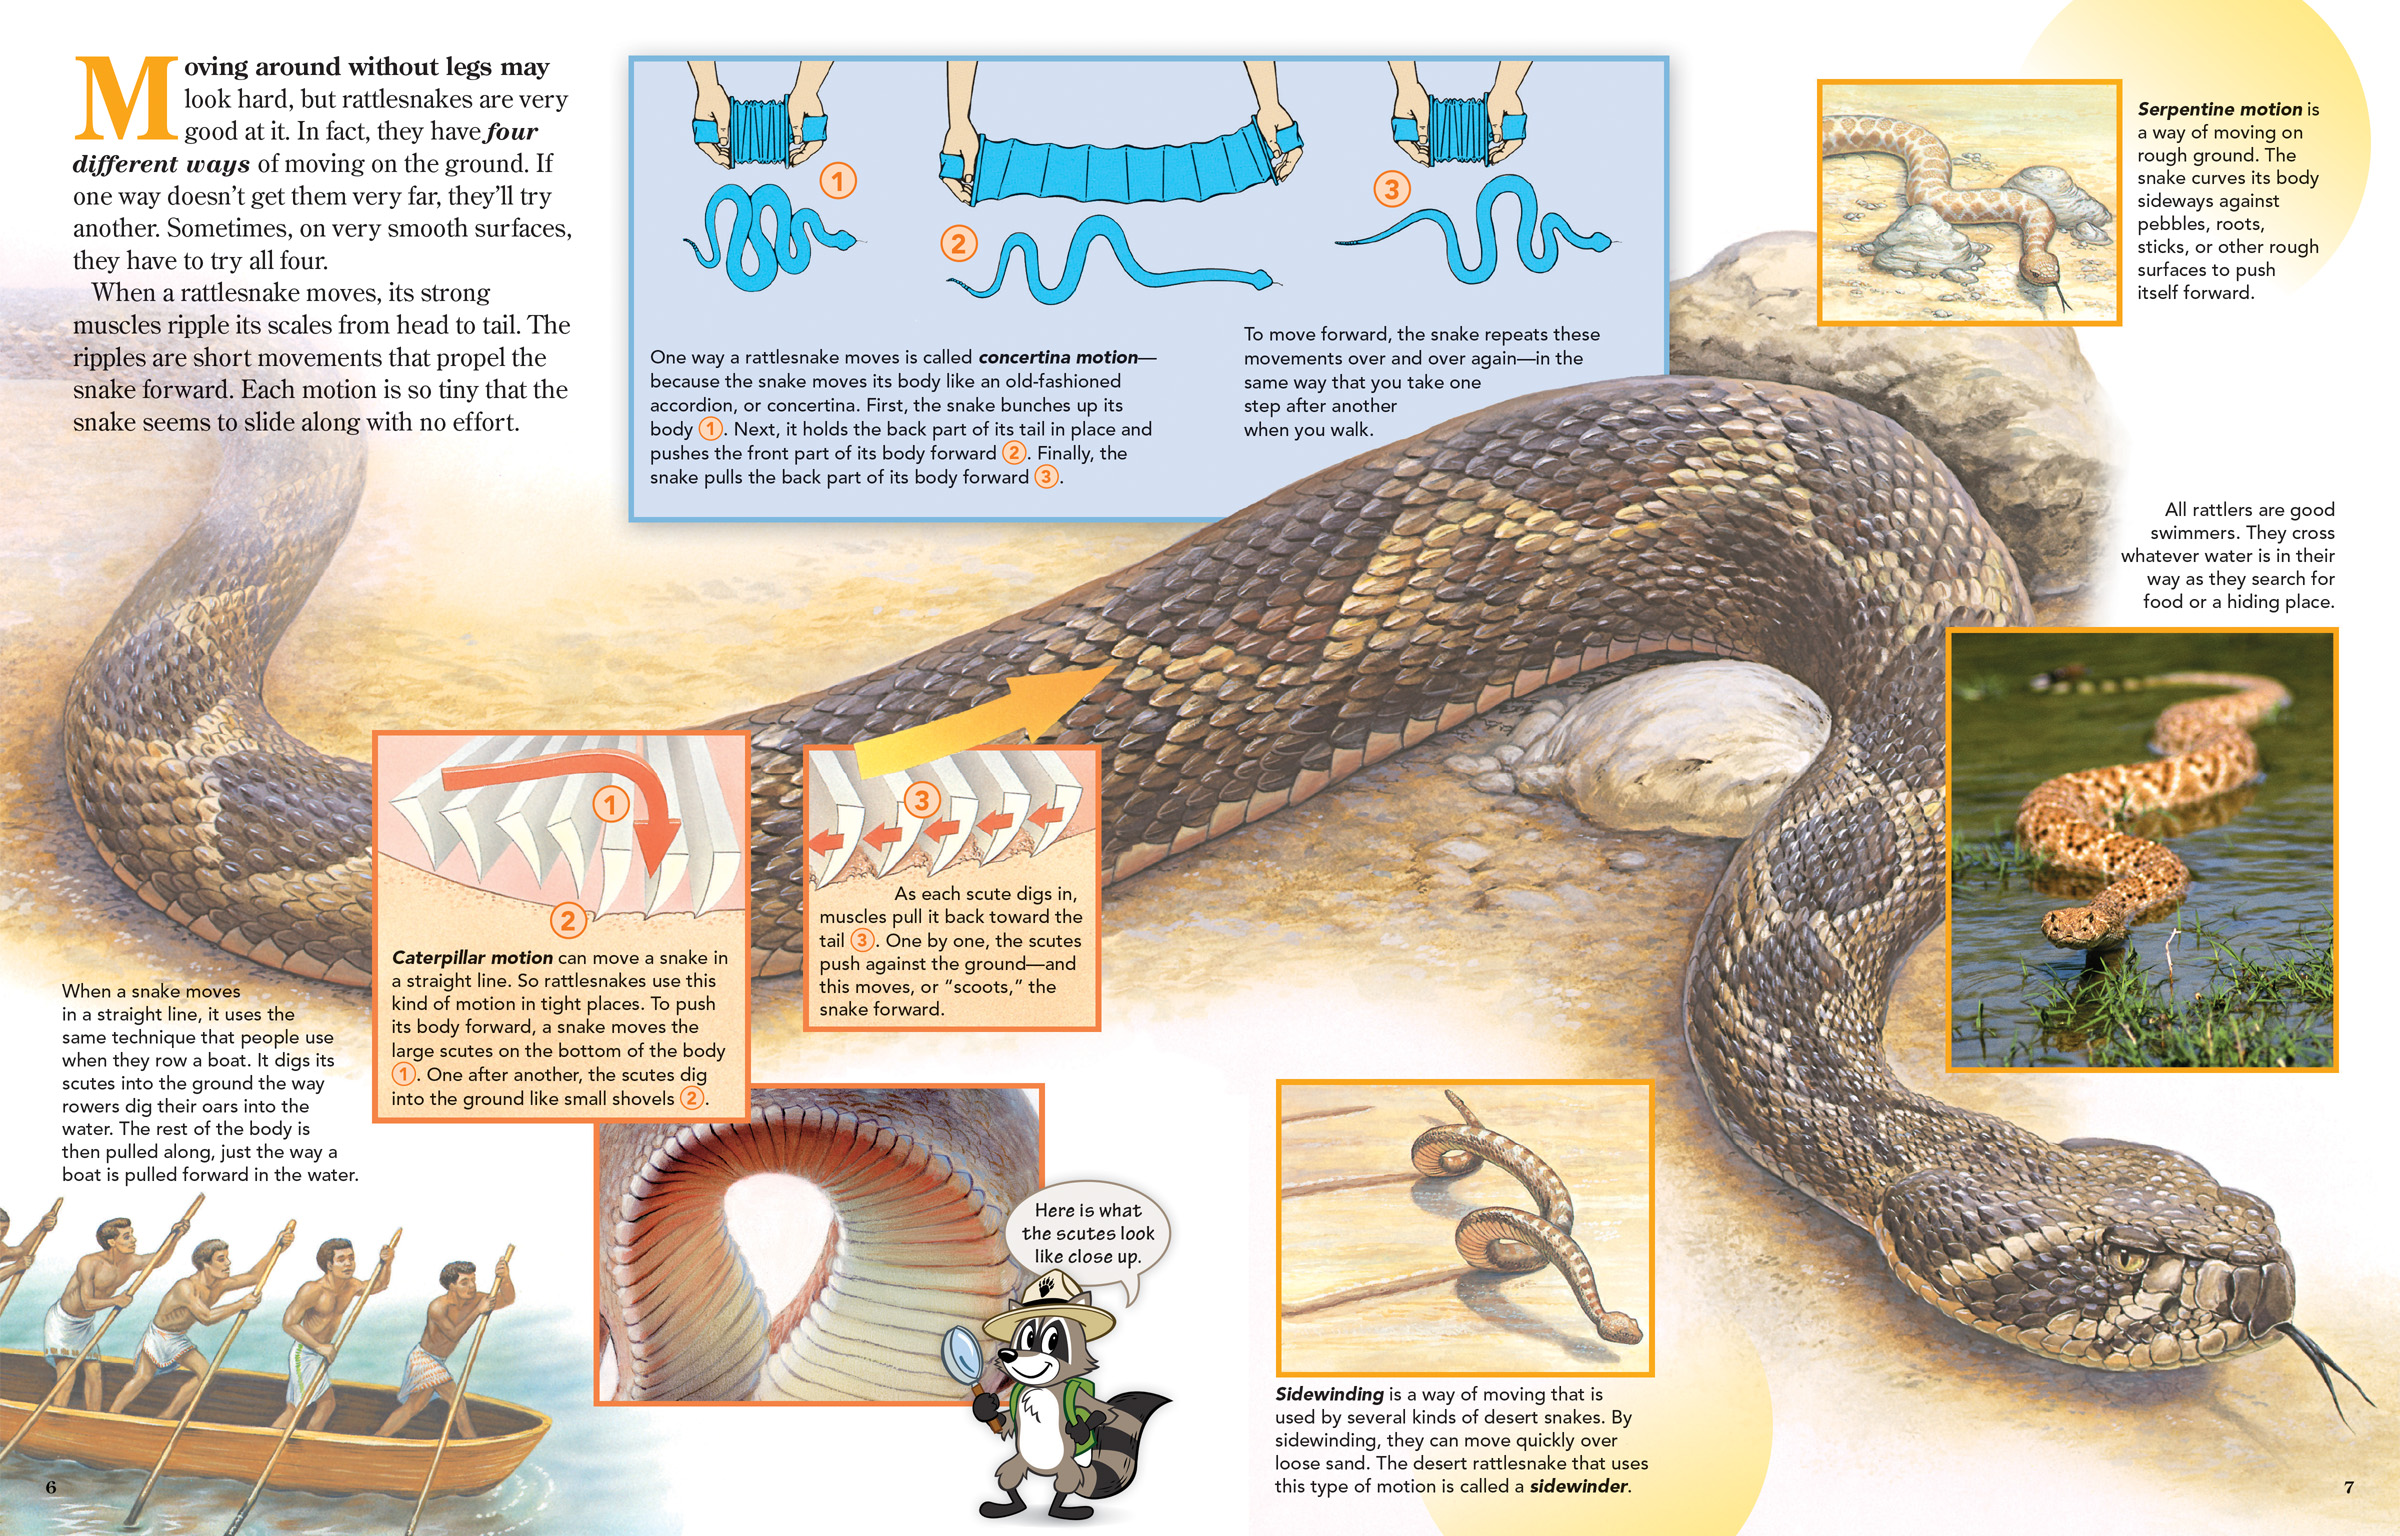 How Do Rattlesnakes Move?